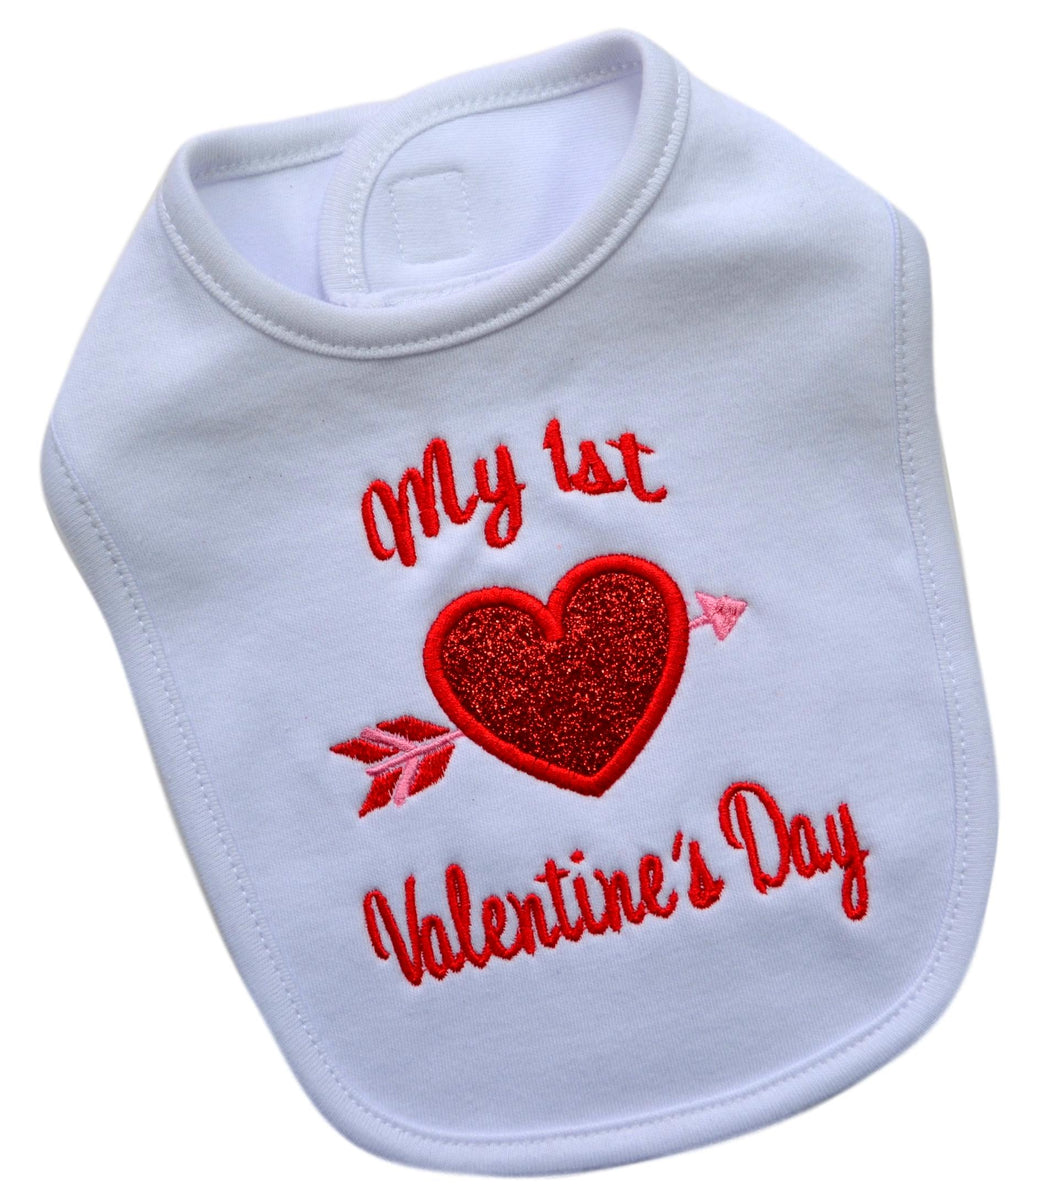 My First Valentine's Day Embroidered Baby Bib